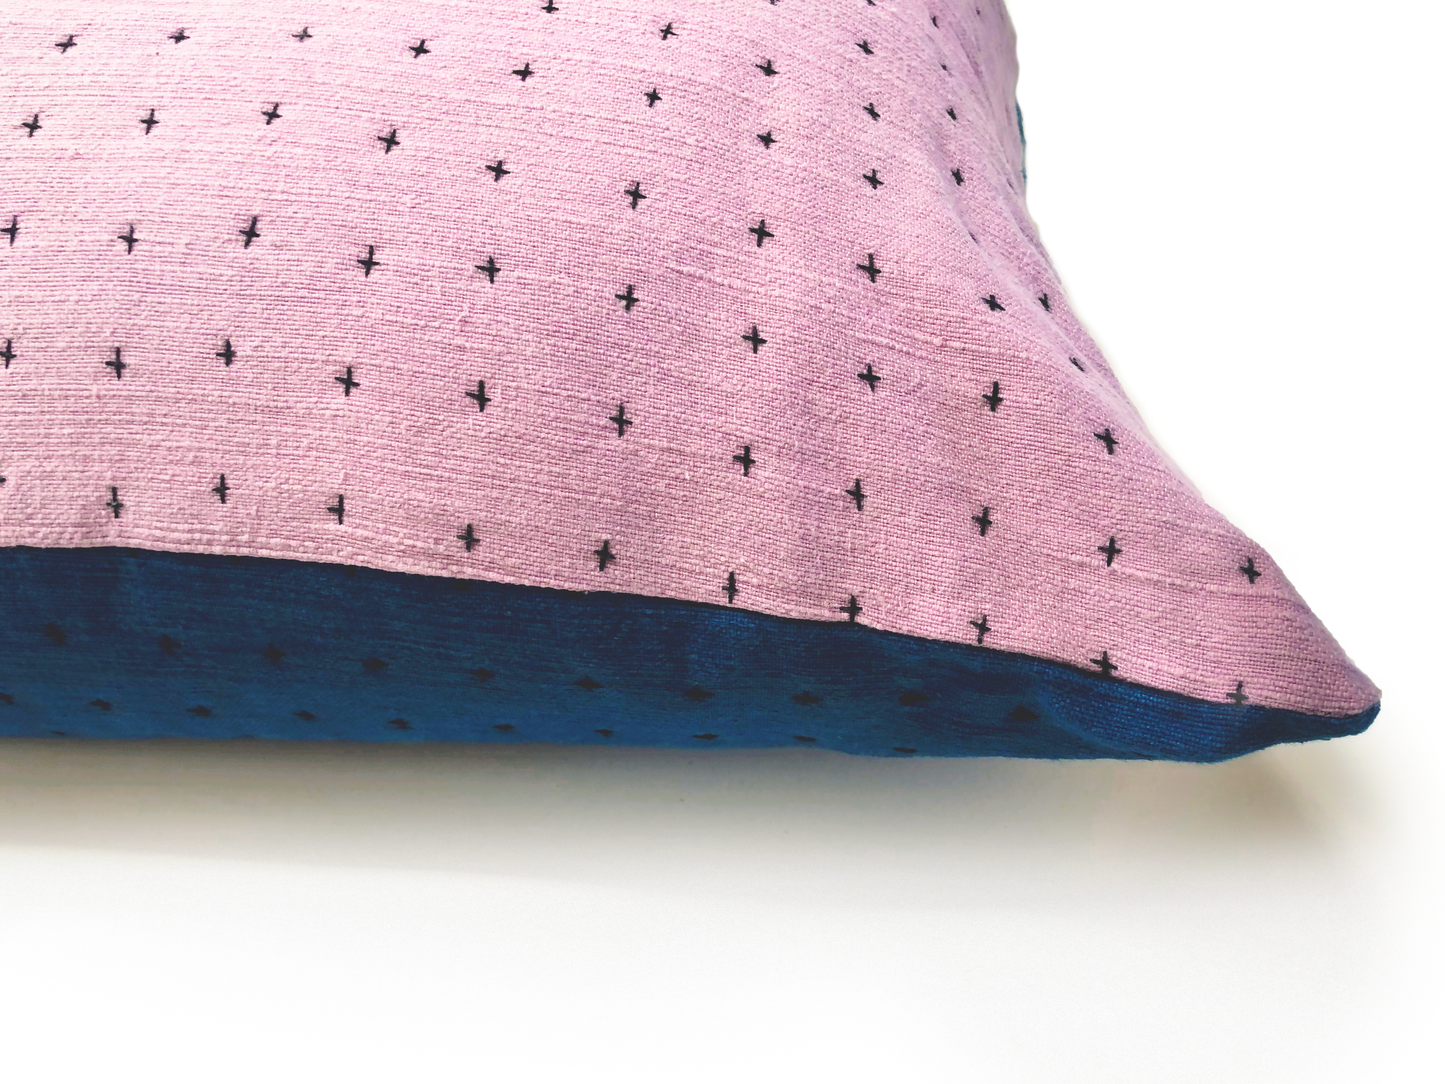 Indigo & Lavender Pillow Cover 18x18in